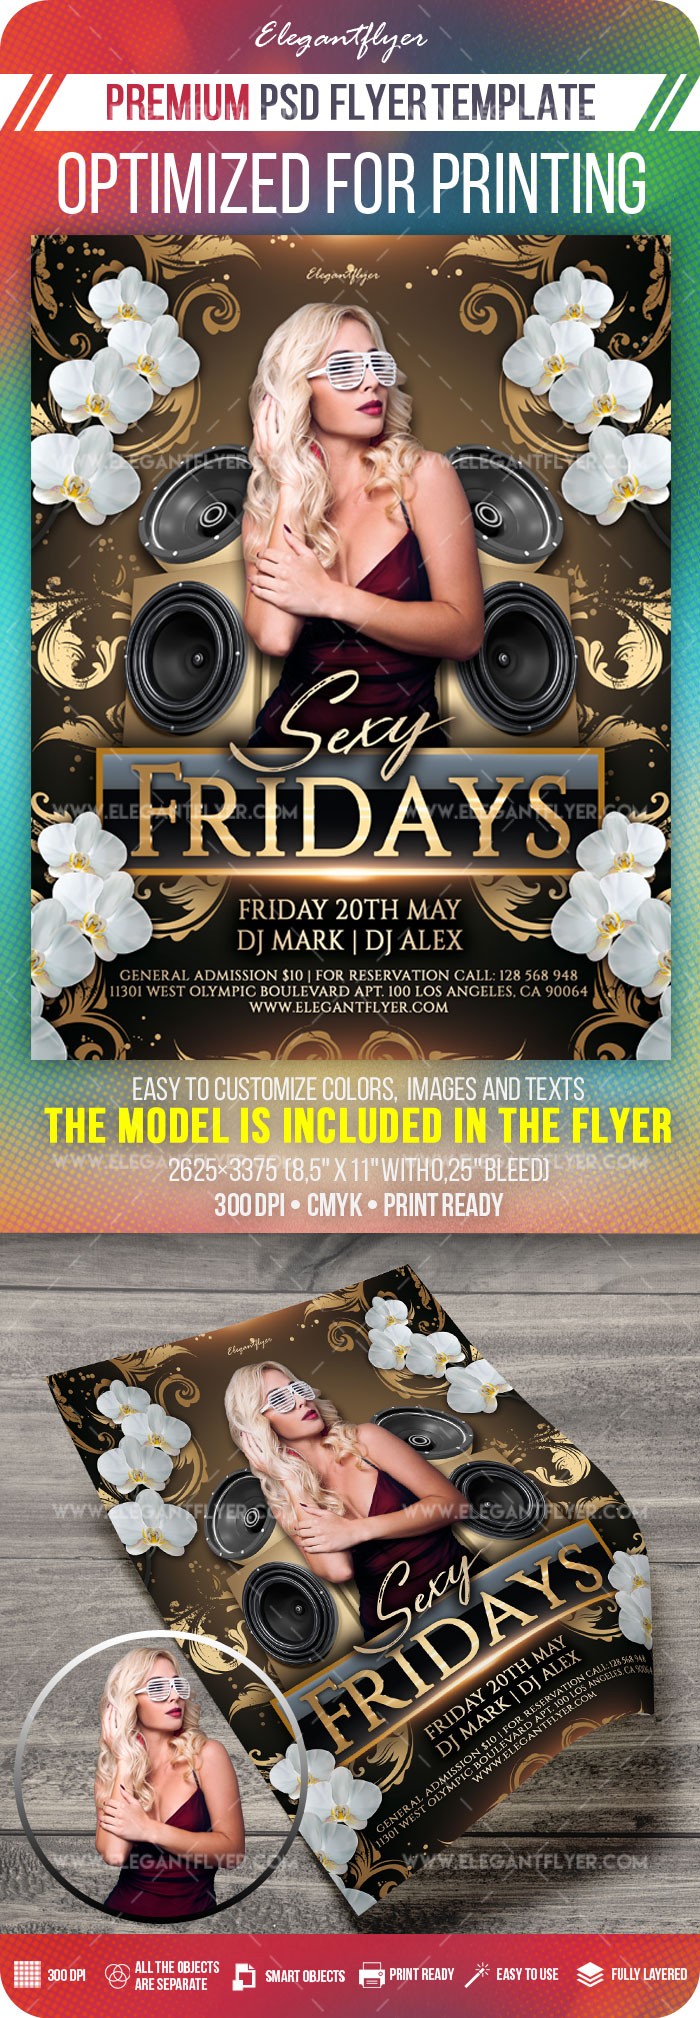 Club Sexy Fridays by ElegantFlyer